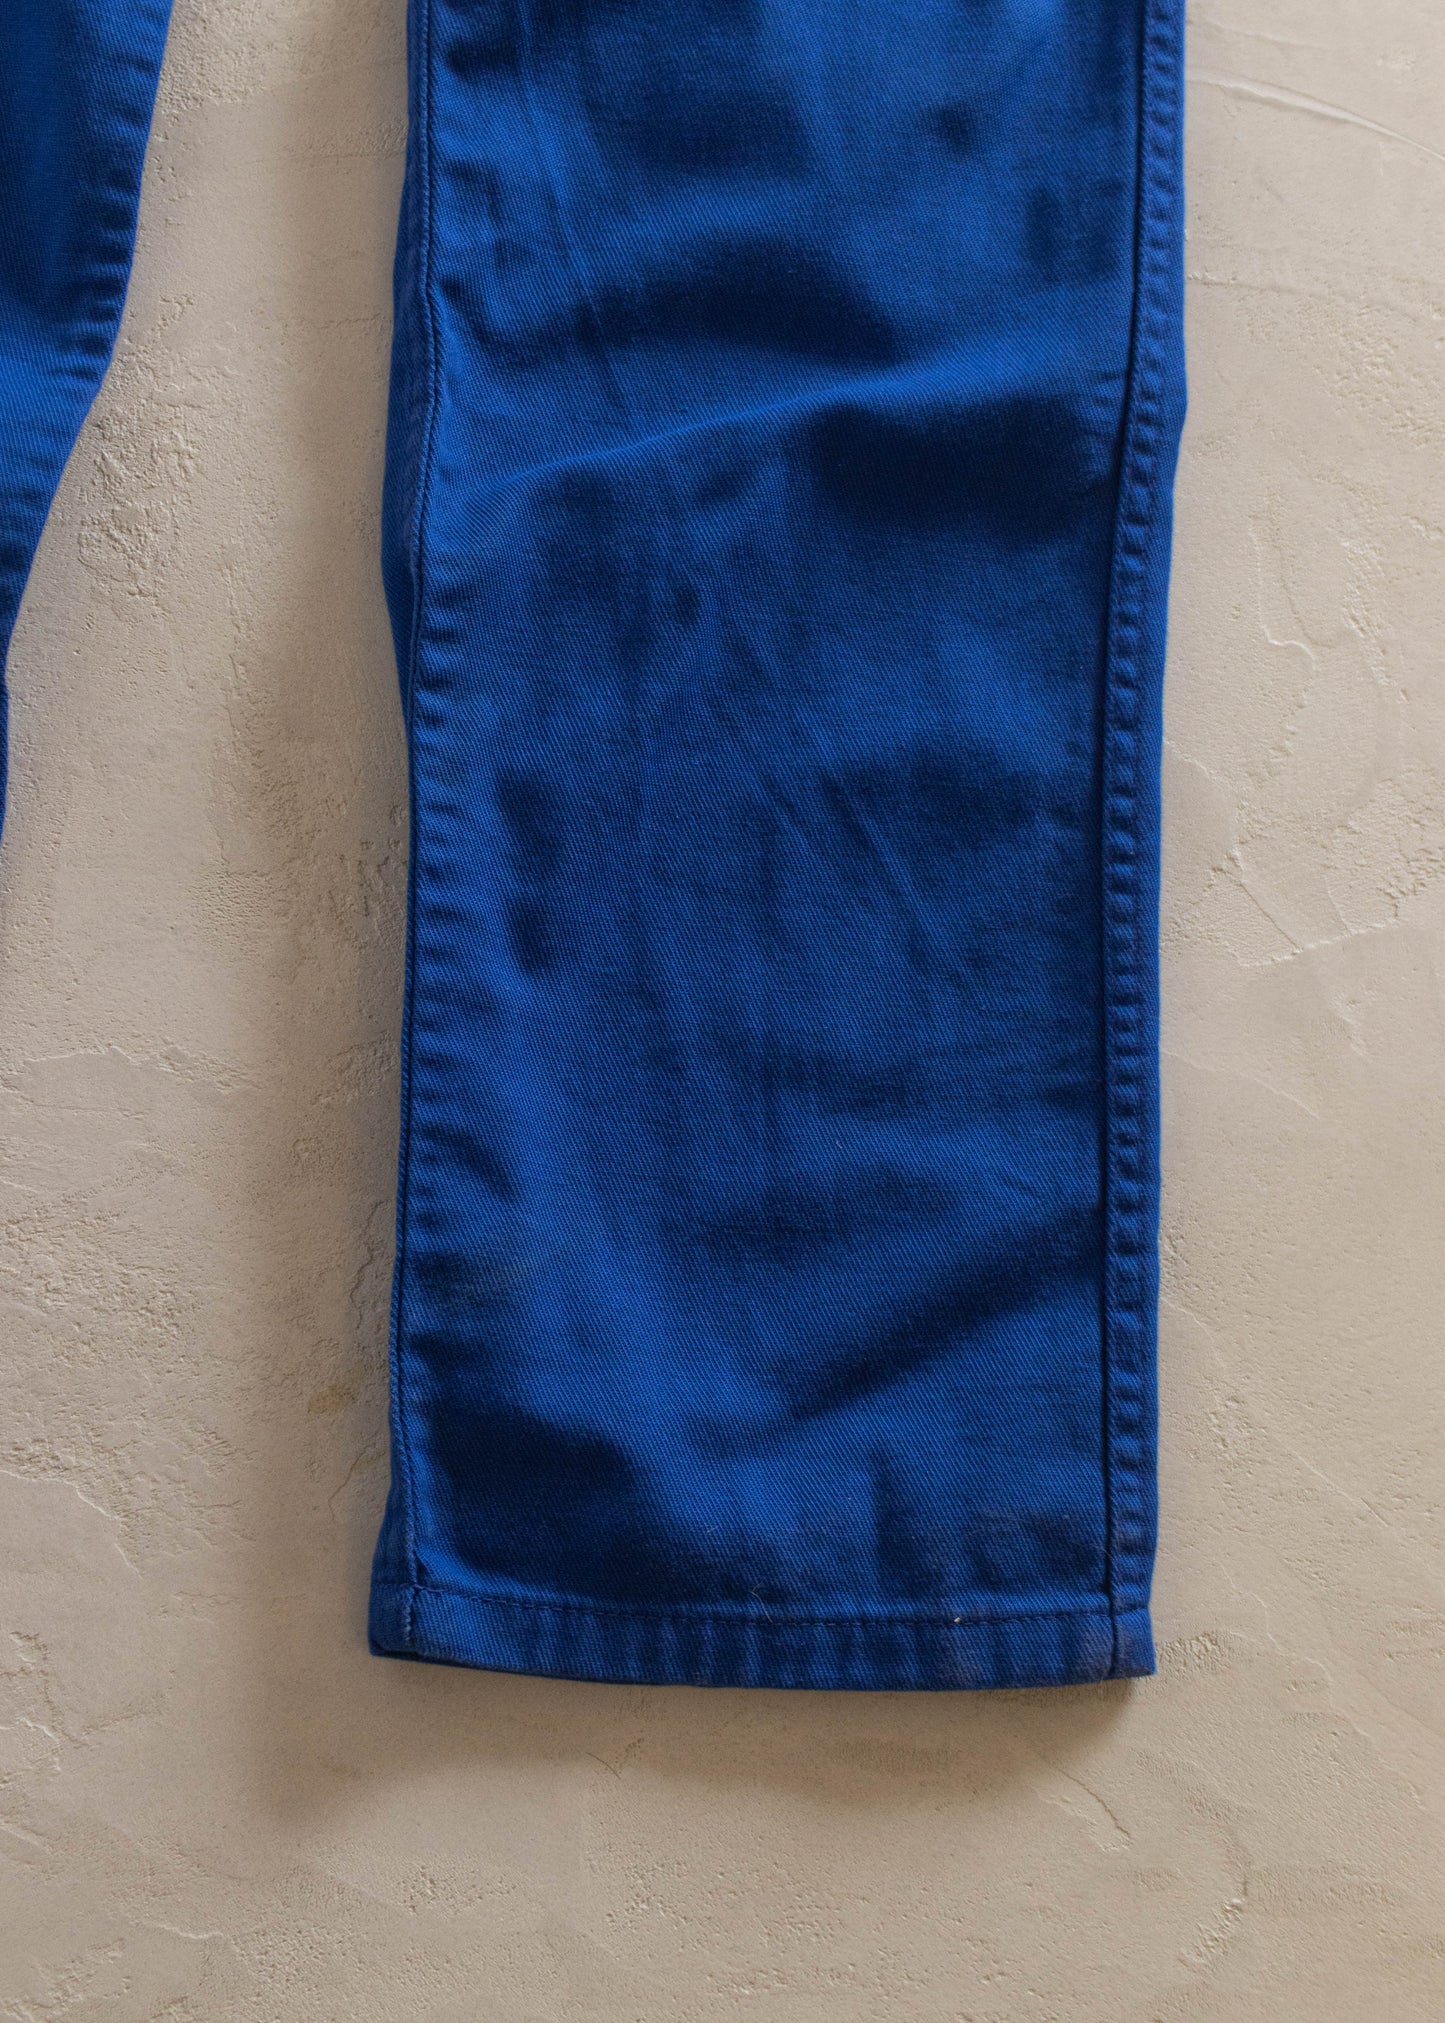 1980s Cepovett French Workwear Chore Pants Size Women's 30 Men's 32